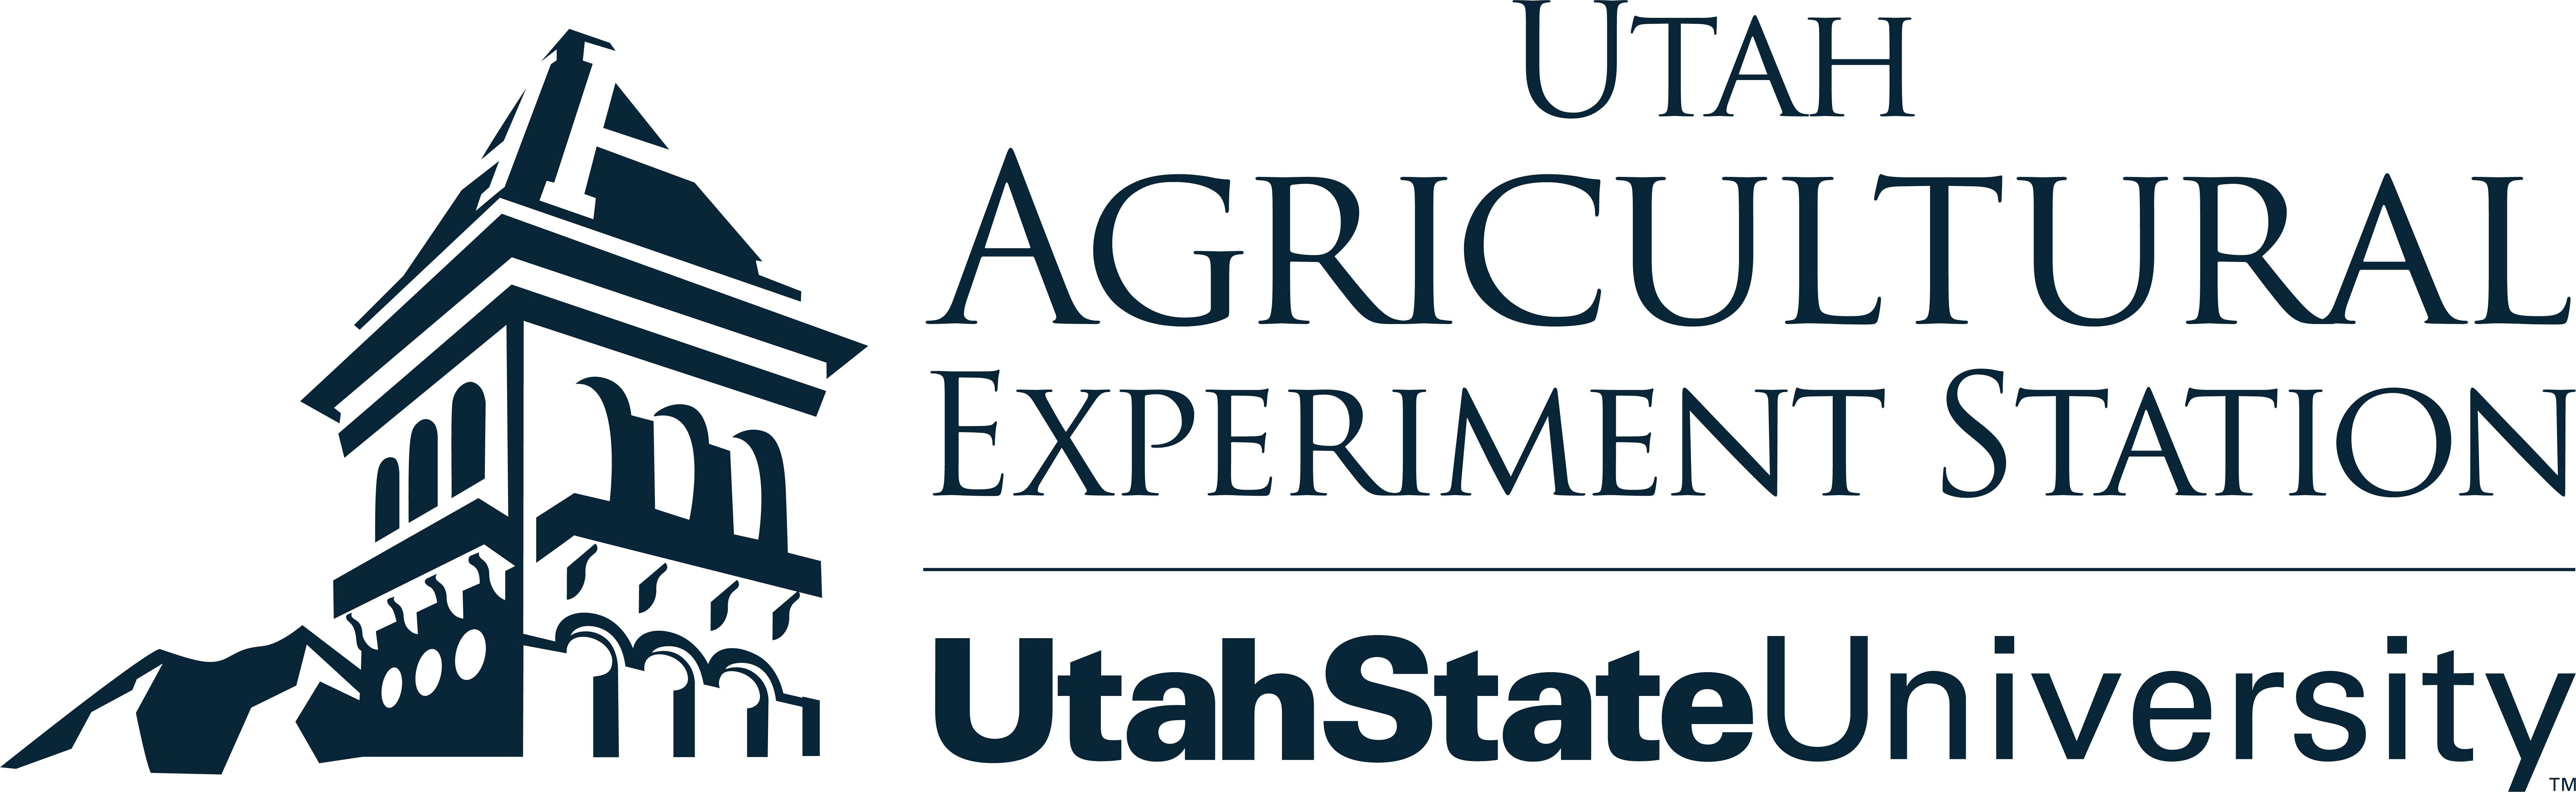 Utah Agricultural Experiment Station